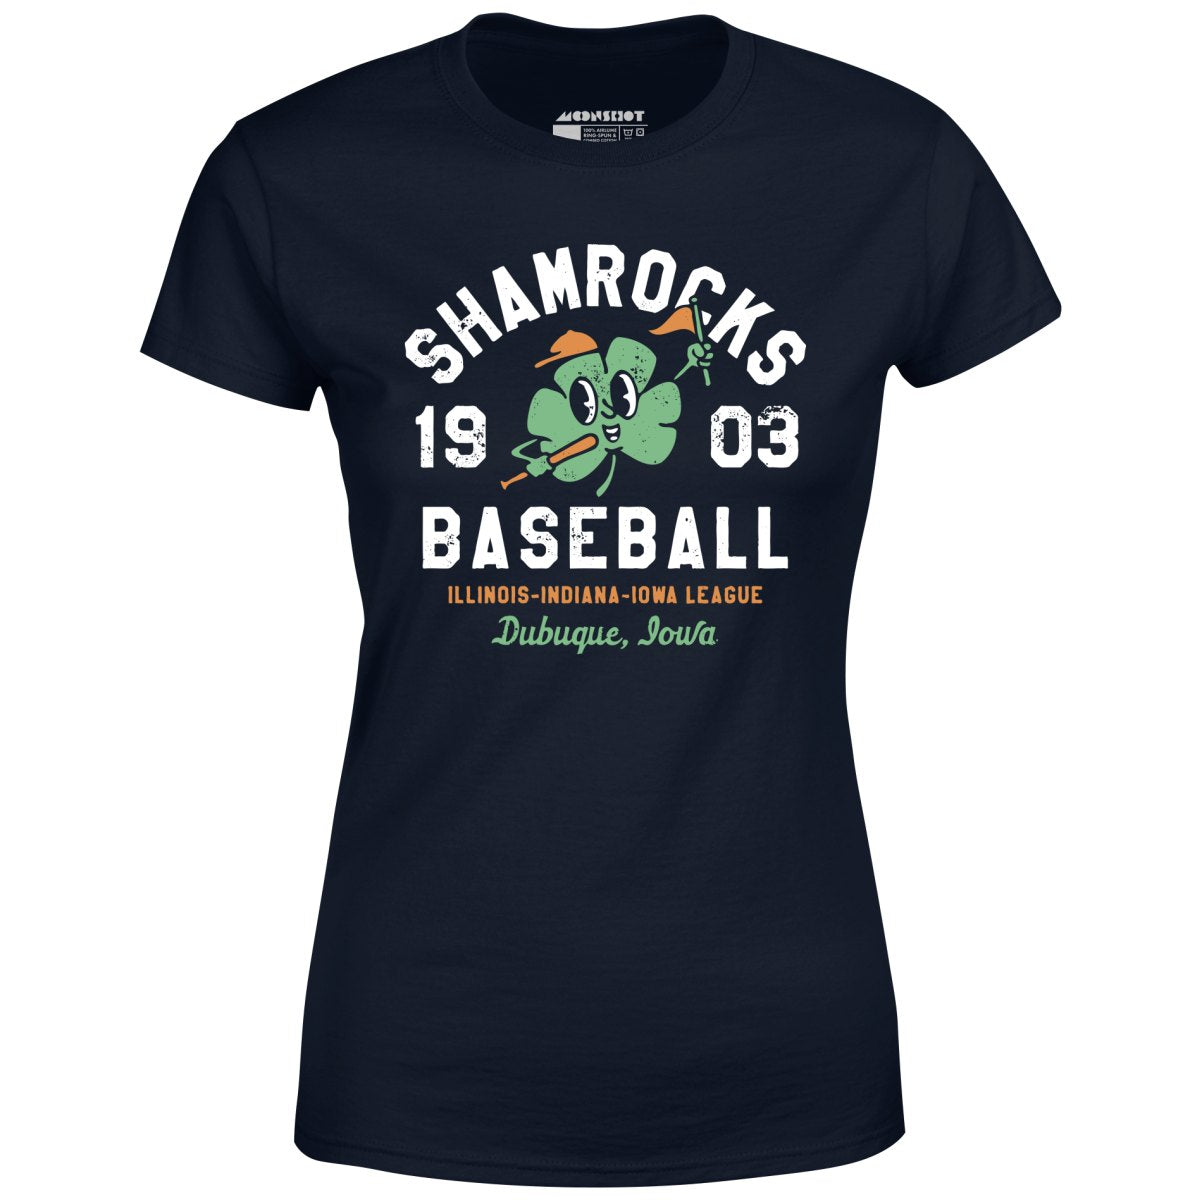 Dubuque Shamrocks - Iowa - Vintage Defunct Baseball Teams - Women's T-Shirt